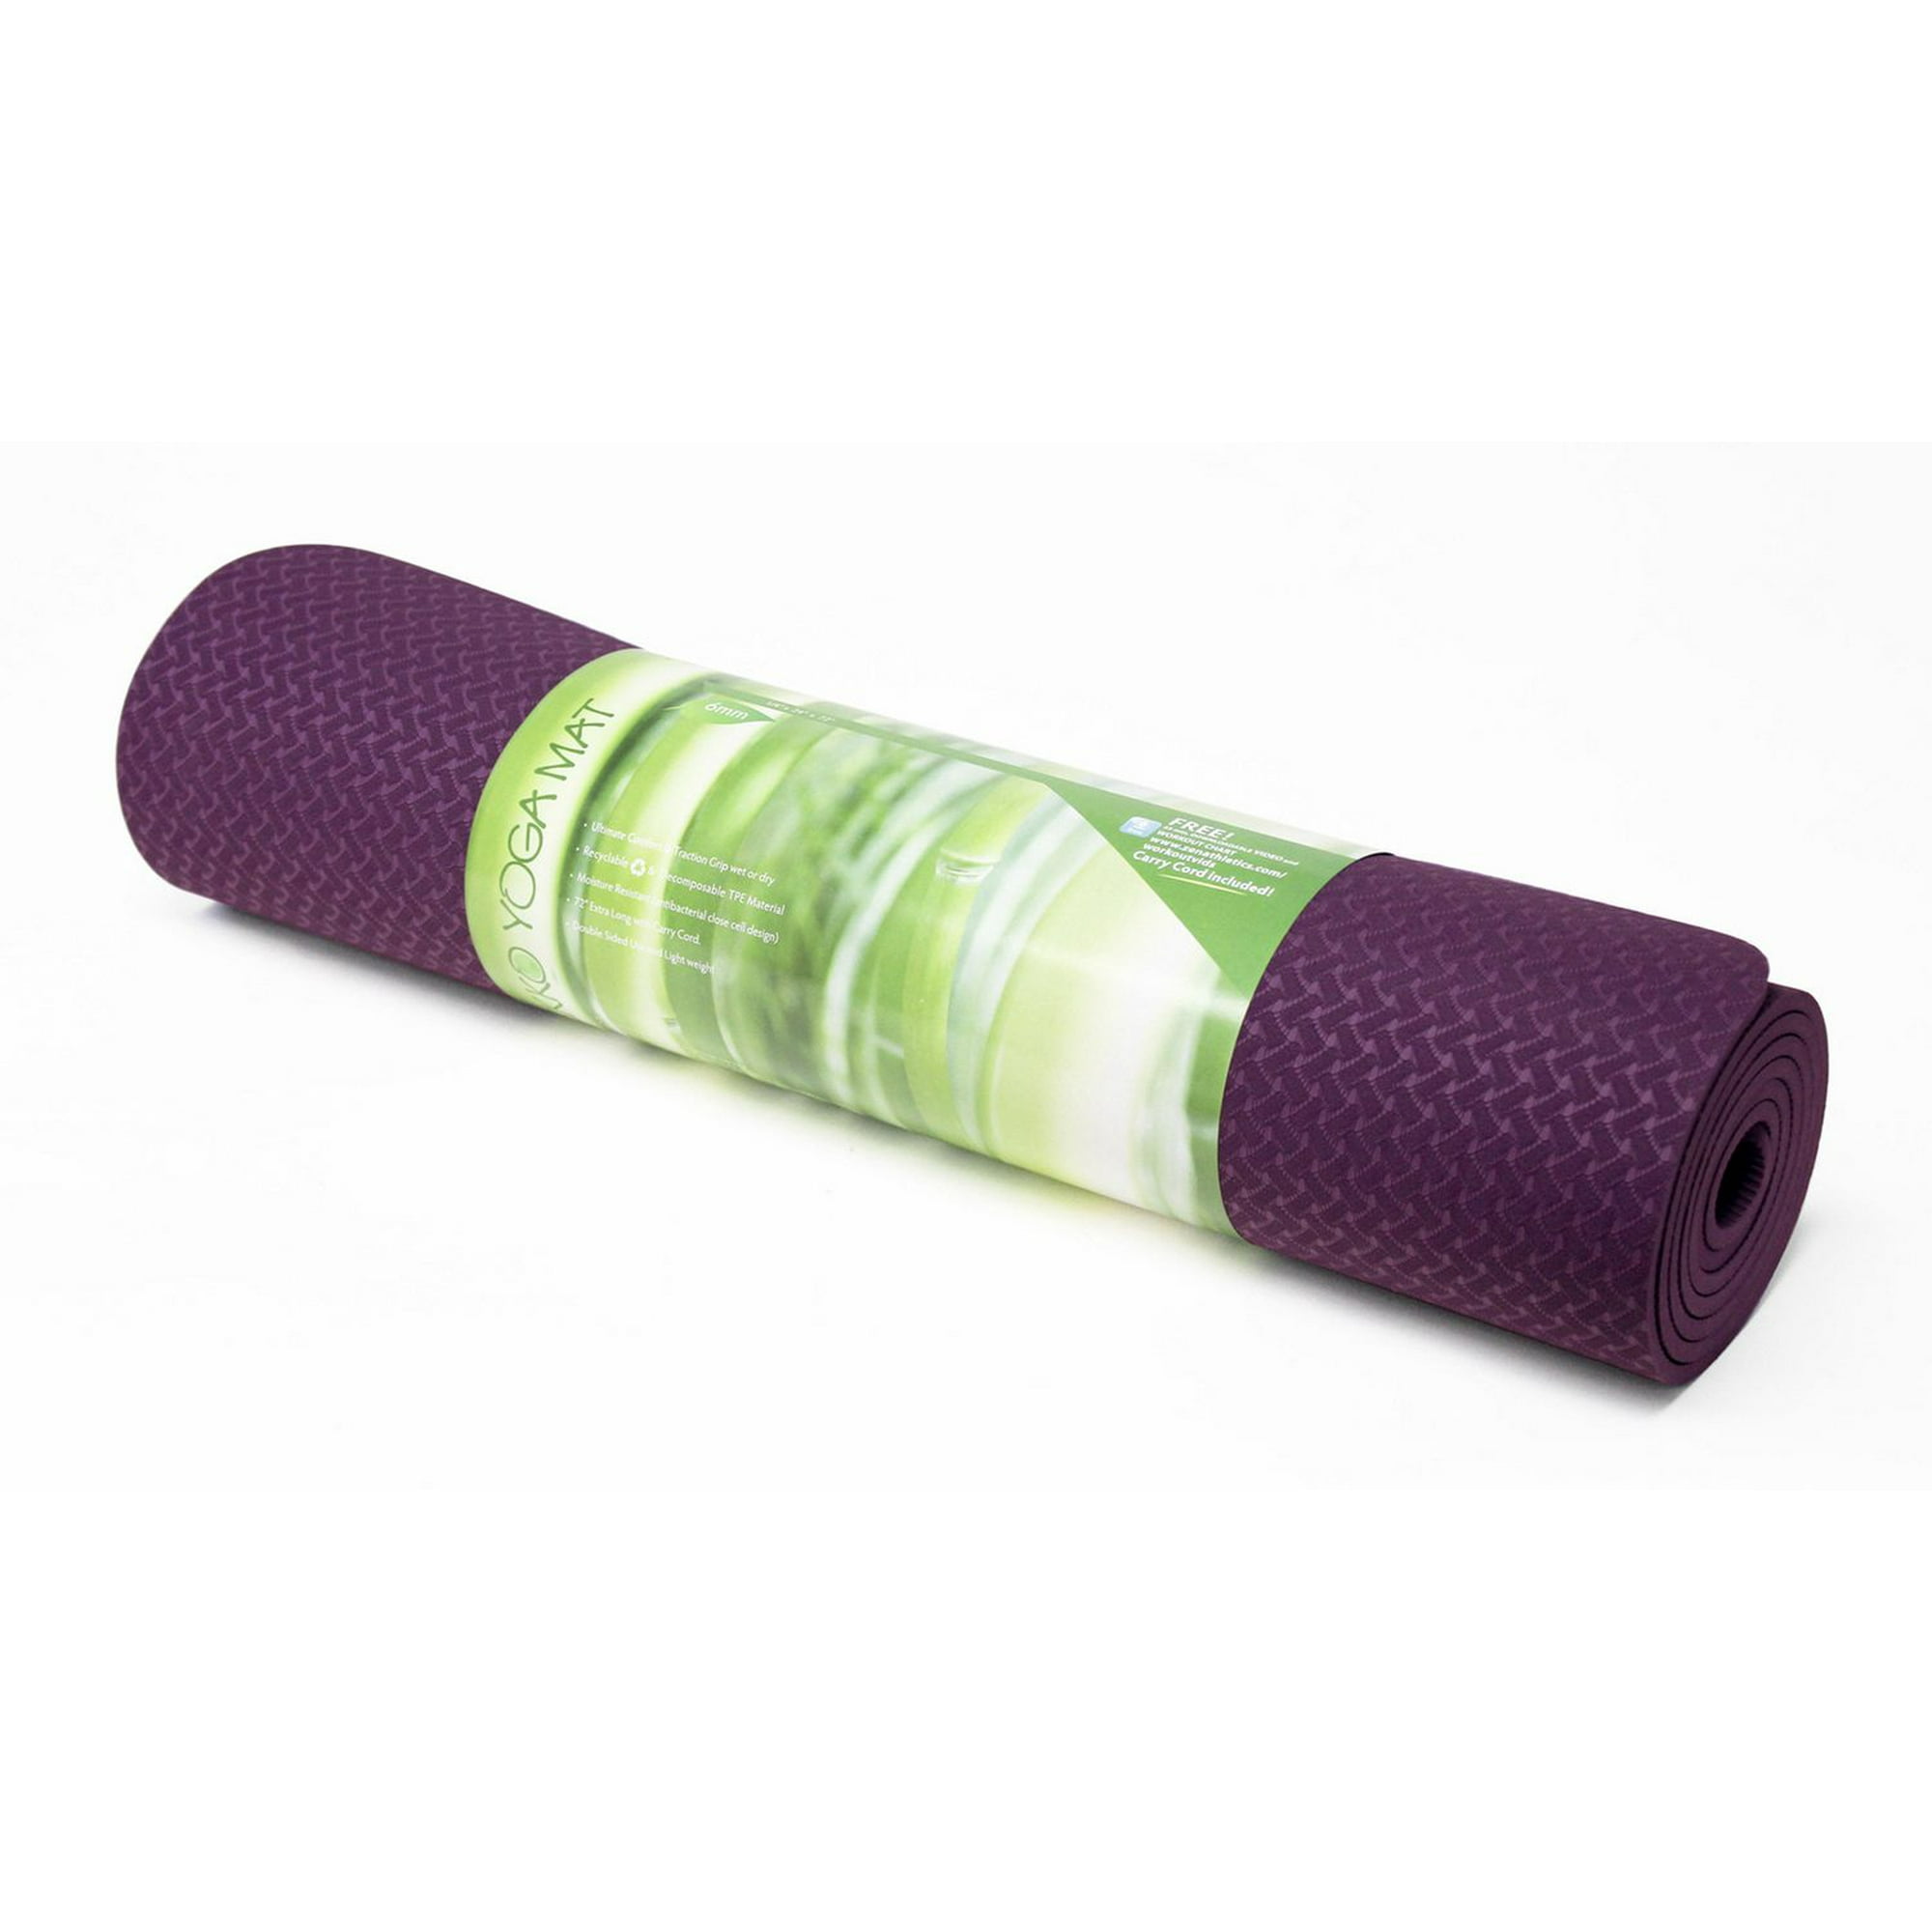 Yoga Mat Essential Balance 4mm - Lemonade pink